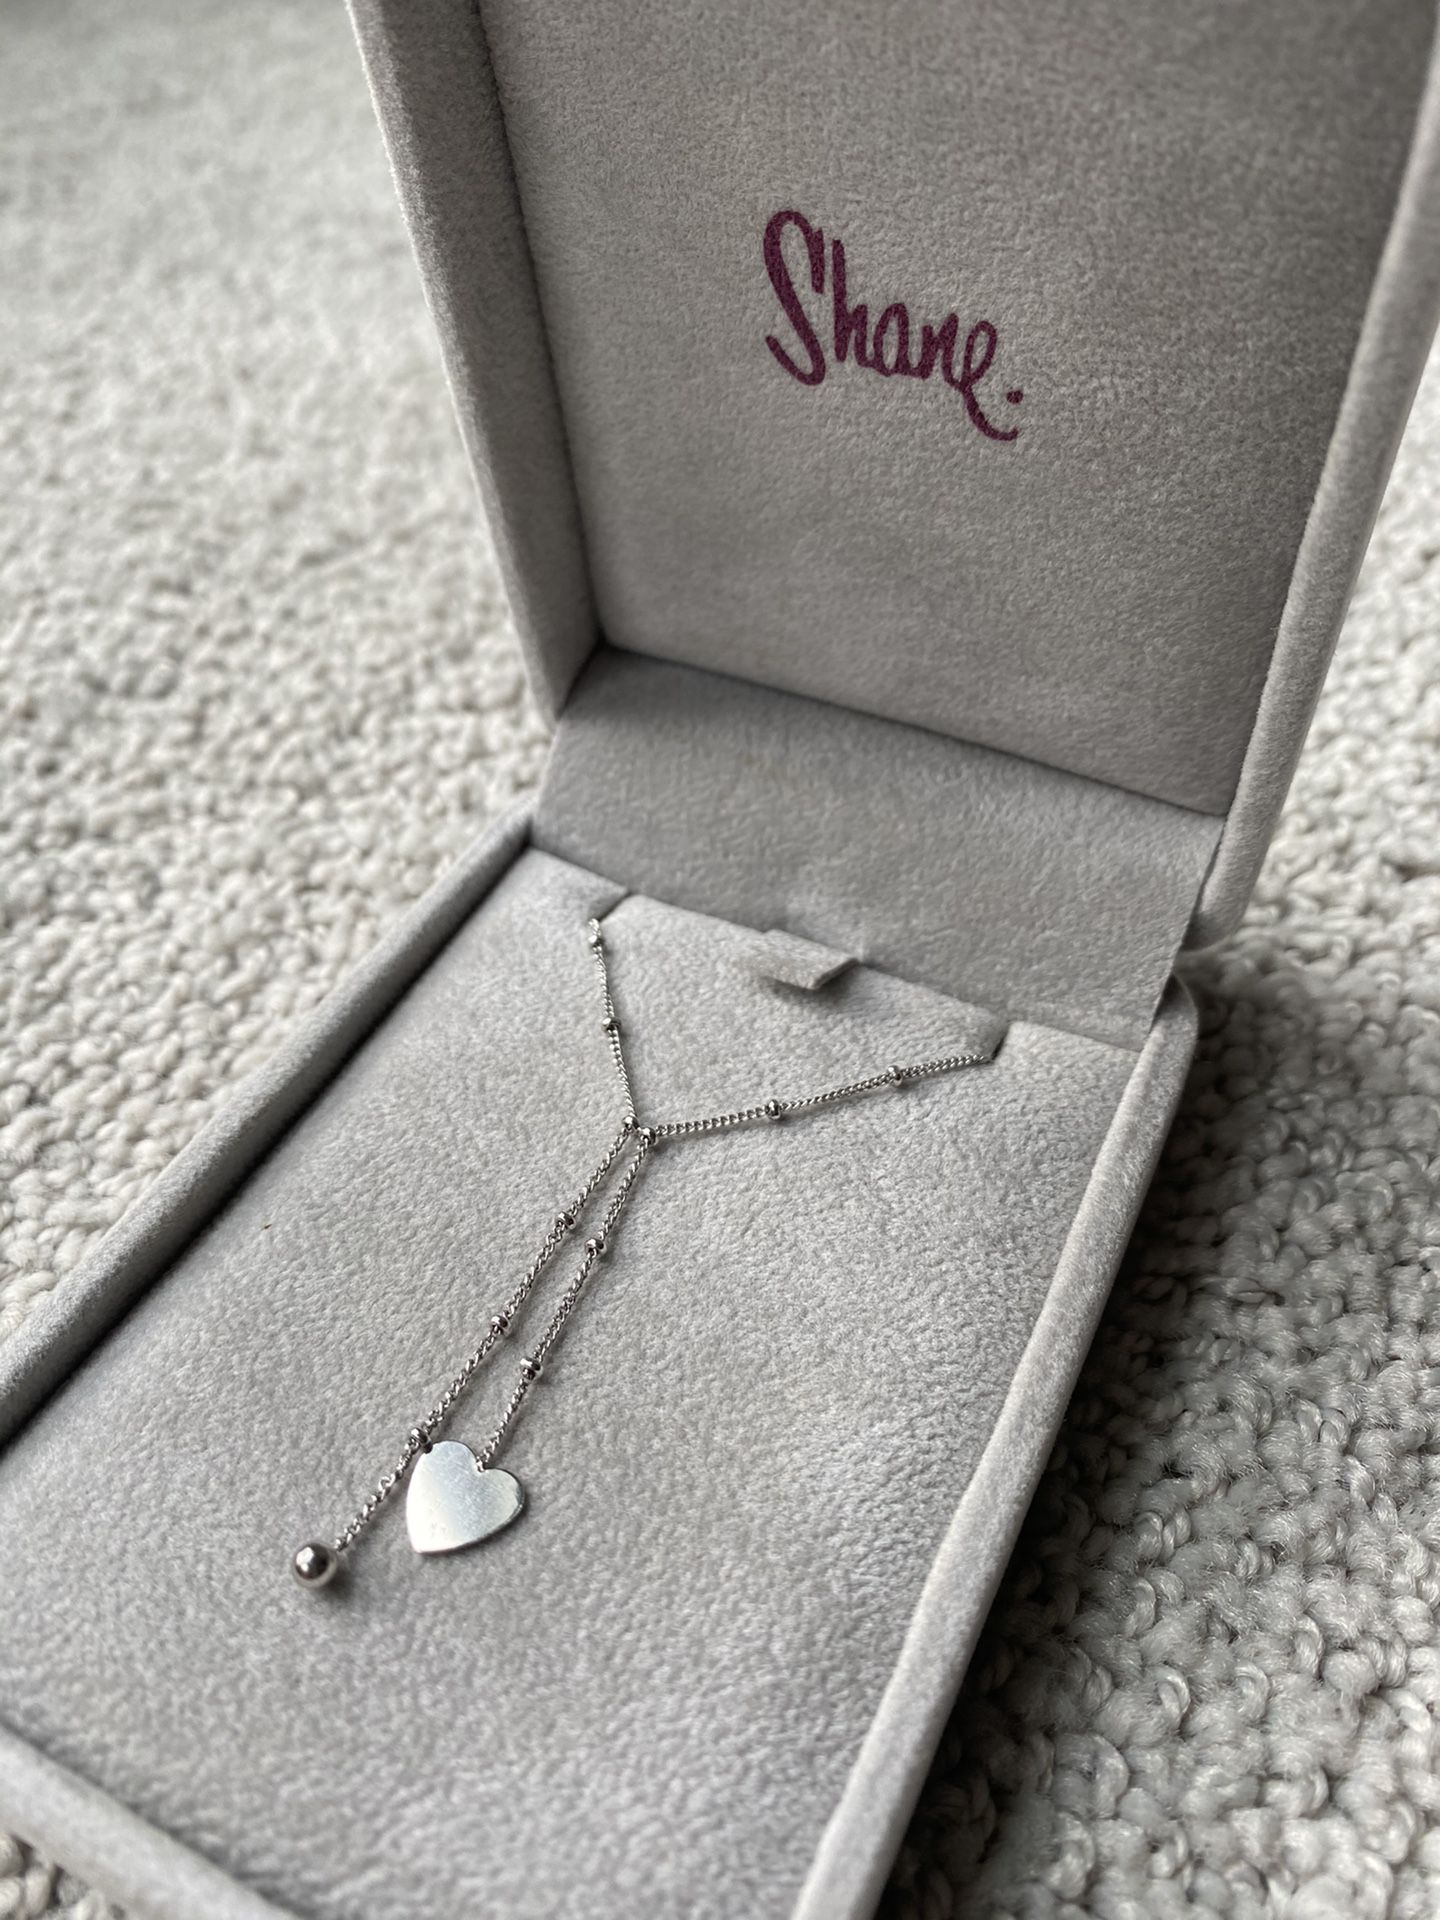 Shane Company Platinum (PT950) Heart Drop Necklace 16” Chain In Original Box!